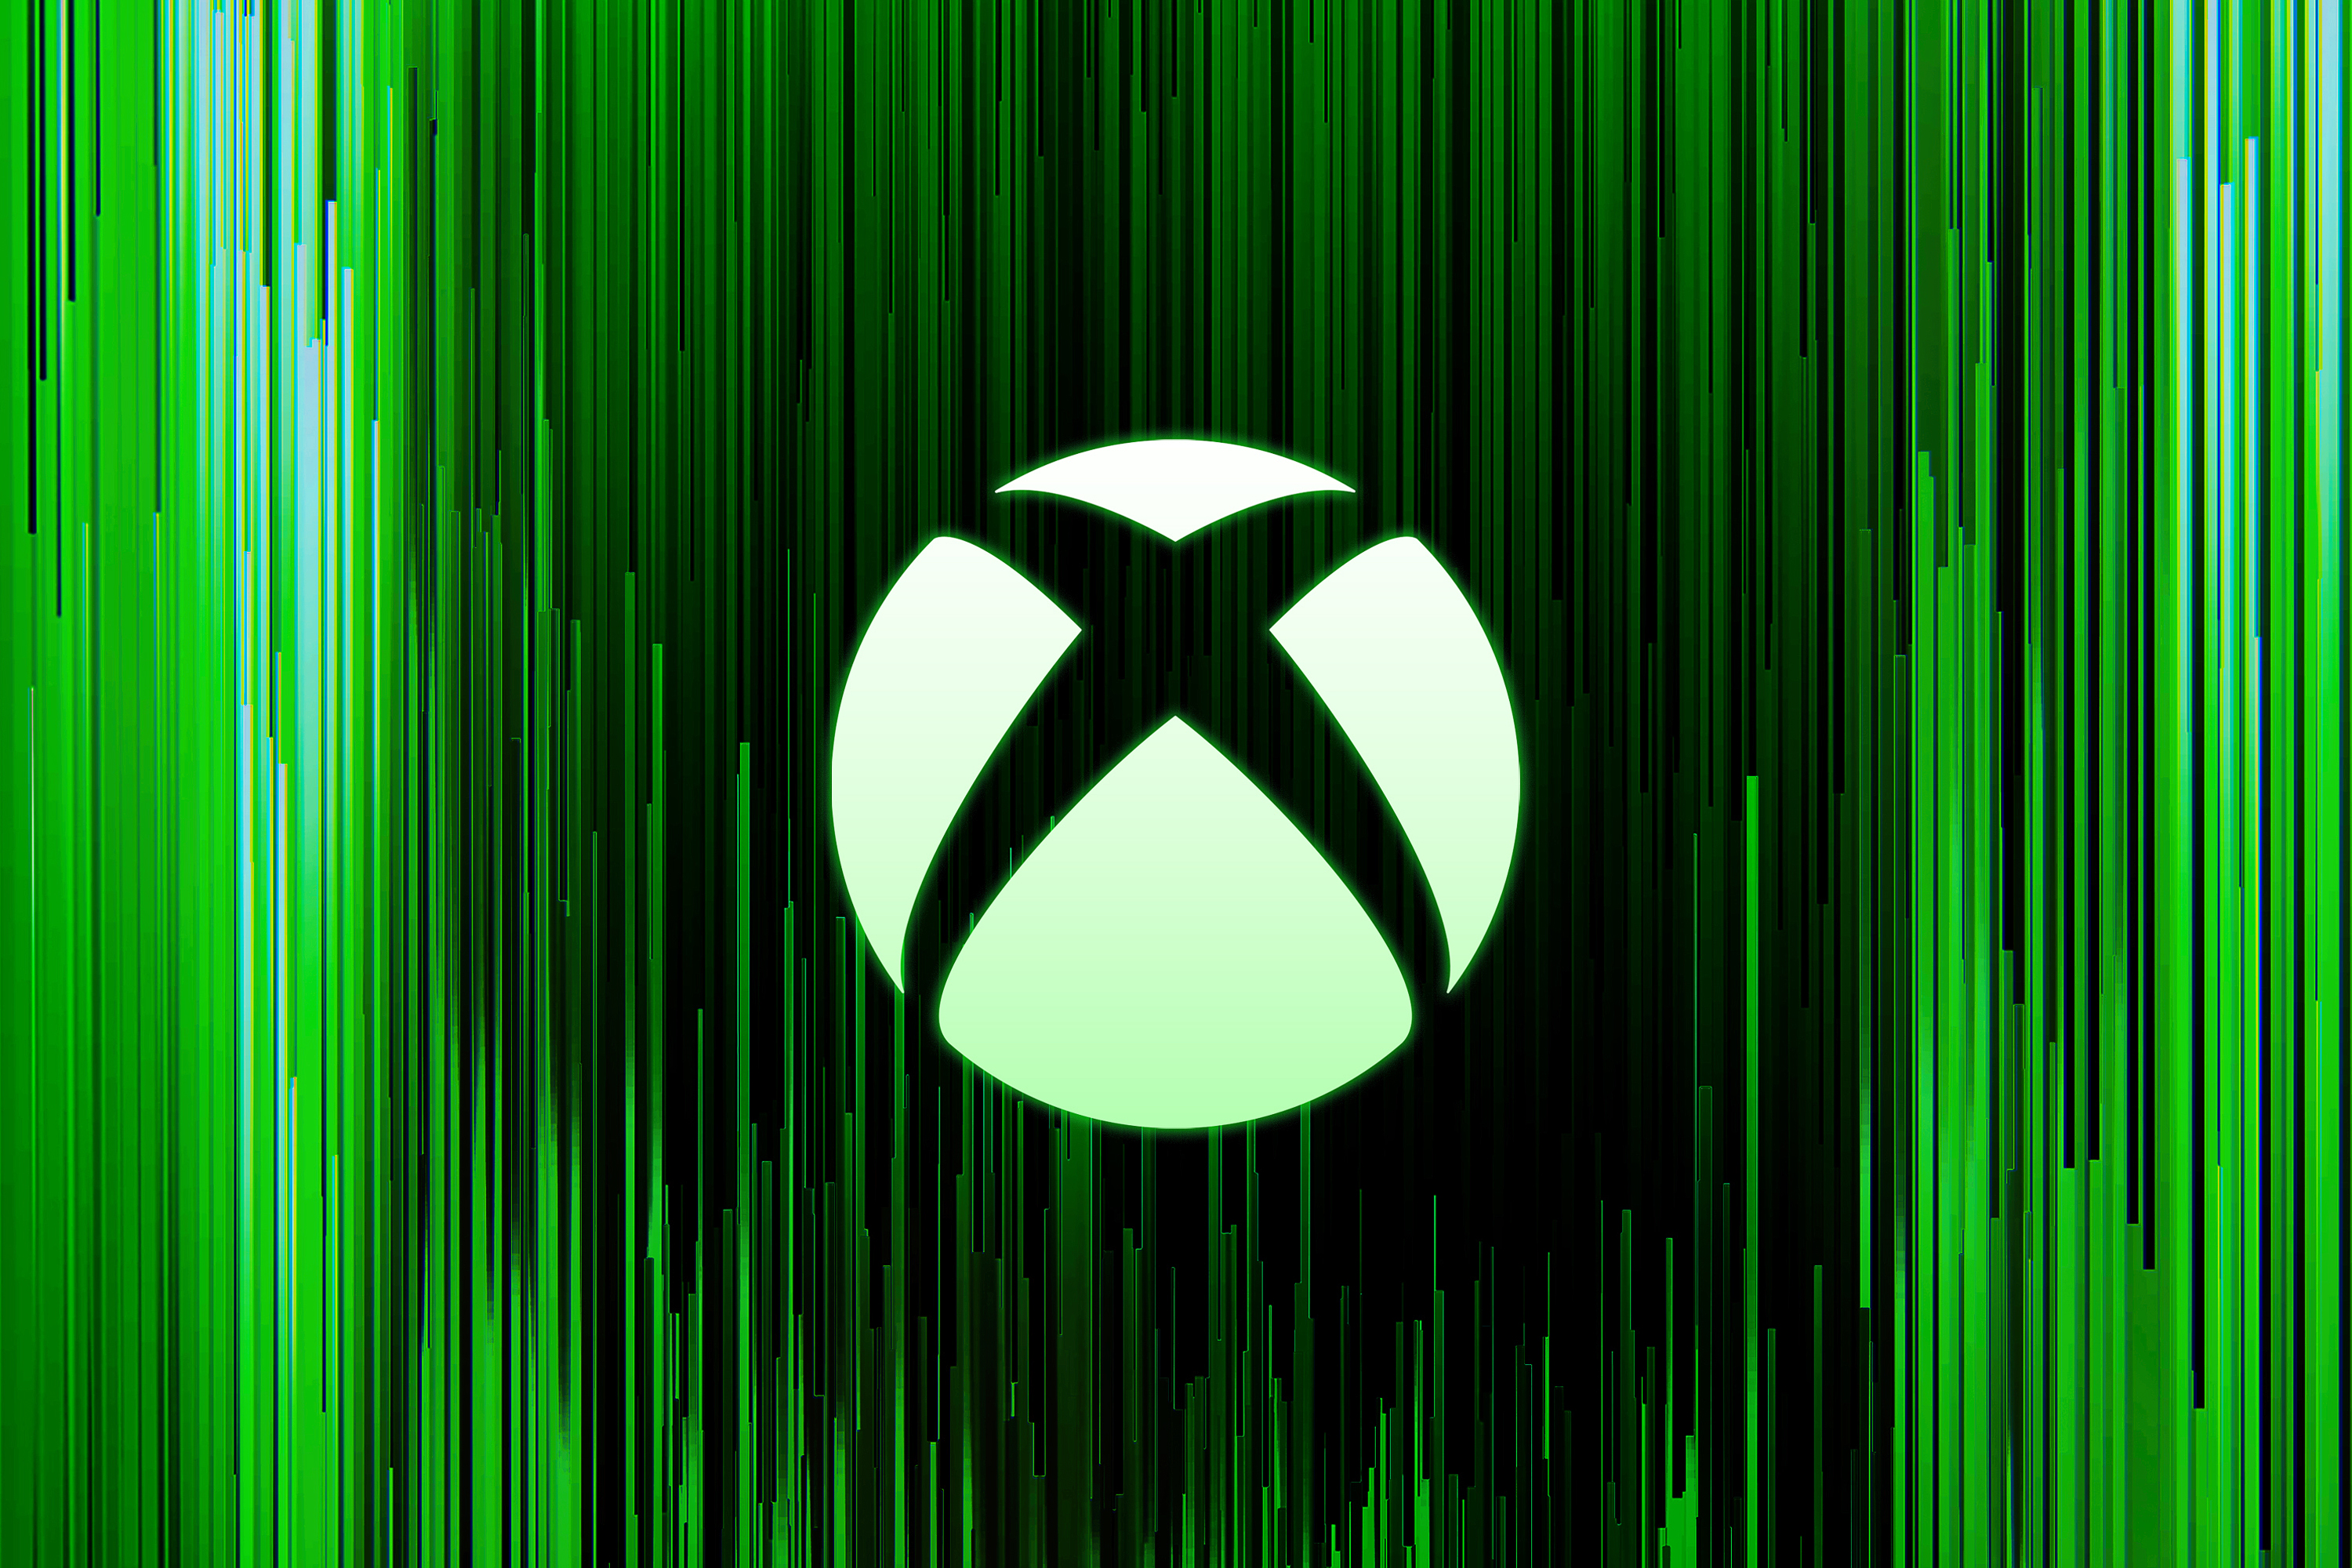 Microsoft Xbox logo on a glitchy green background